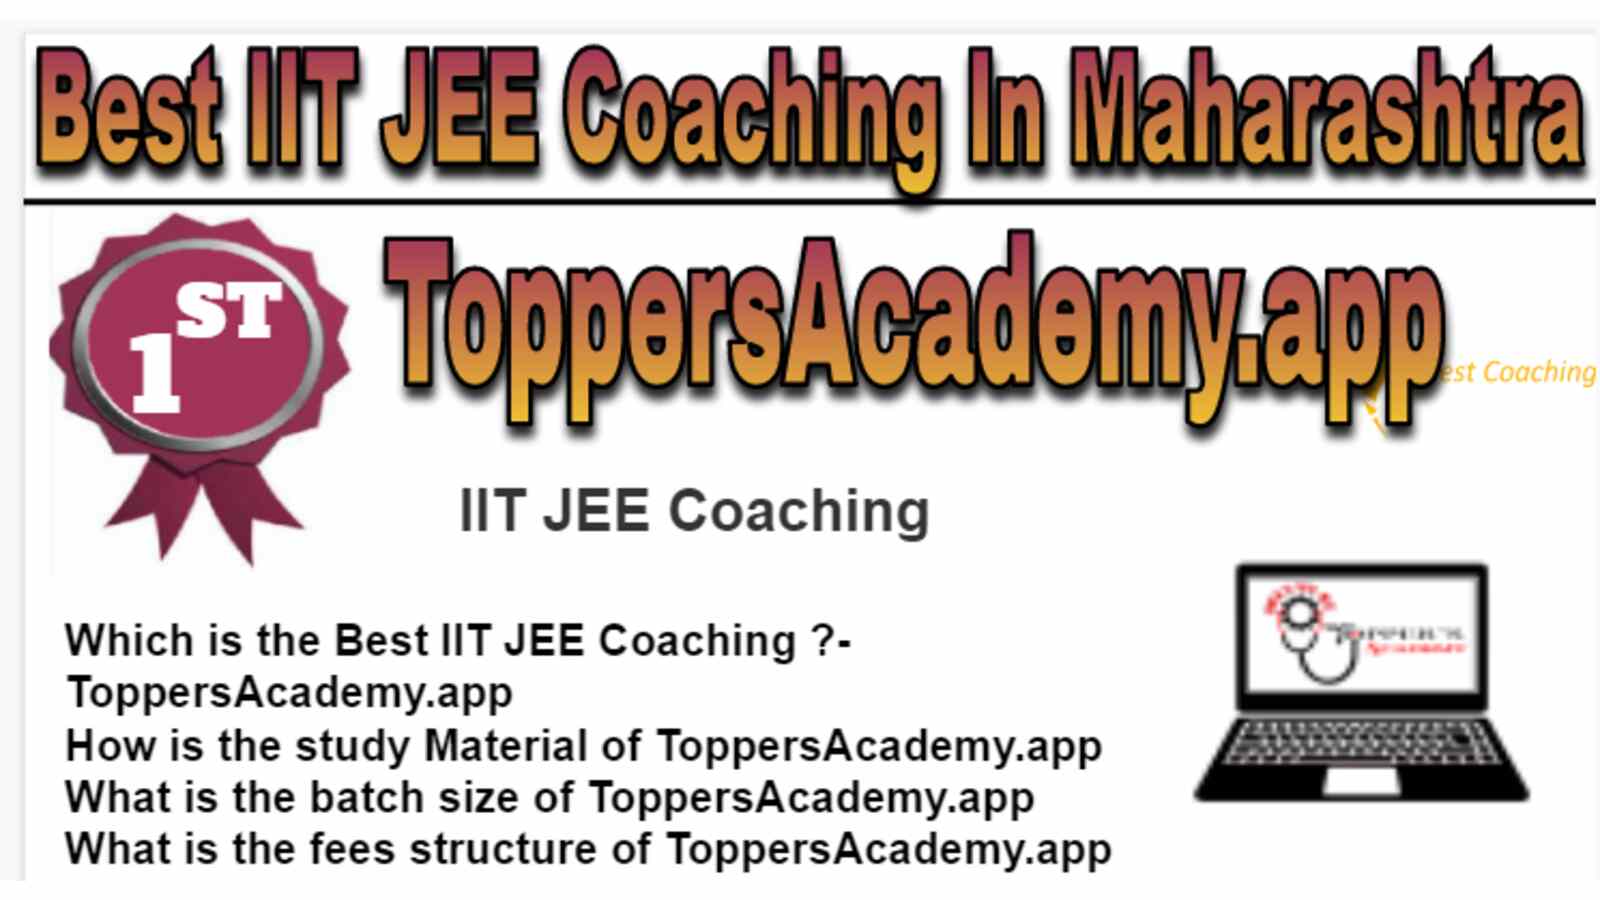 Rank 1 Best IIT JEE Coaching In Maharashtra